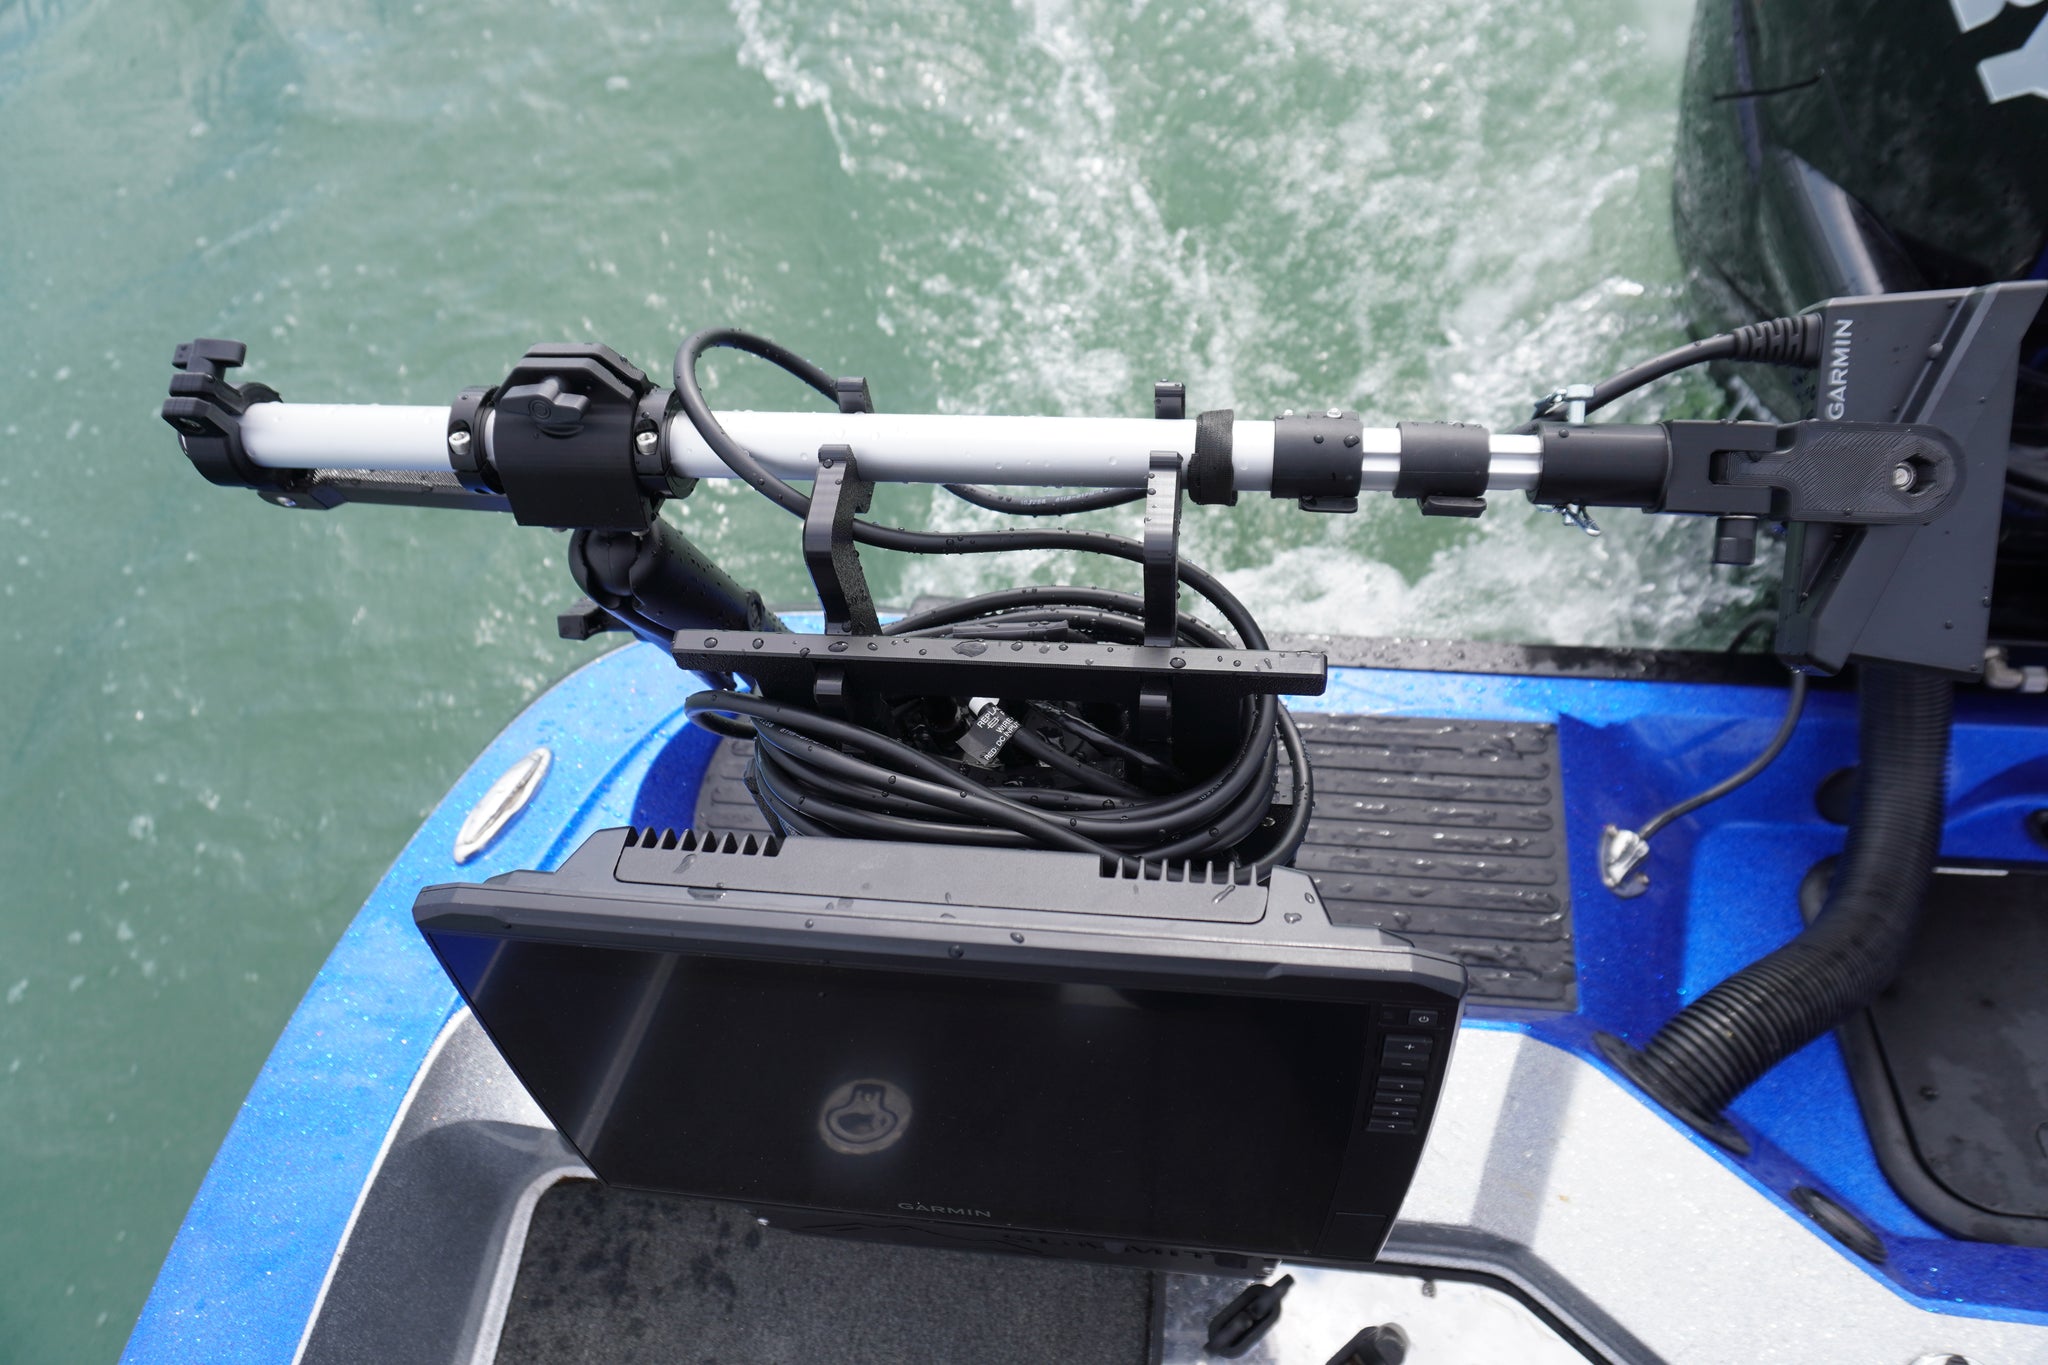 Garmin Livescope Electronics Package Preassembled Shuttle – Summit Fishing  Equipment